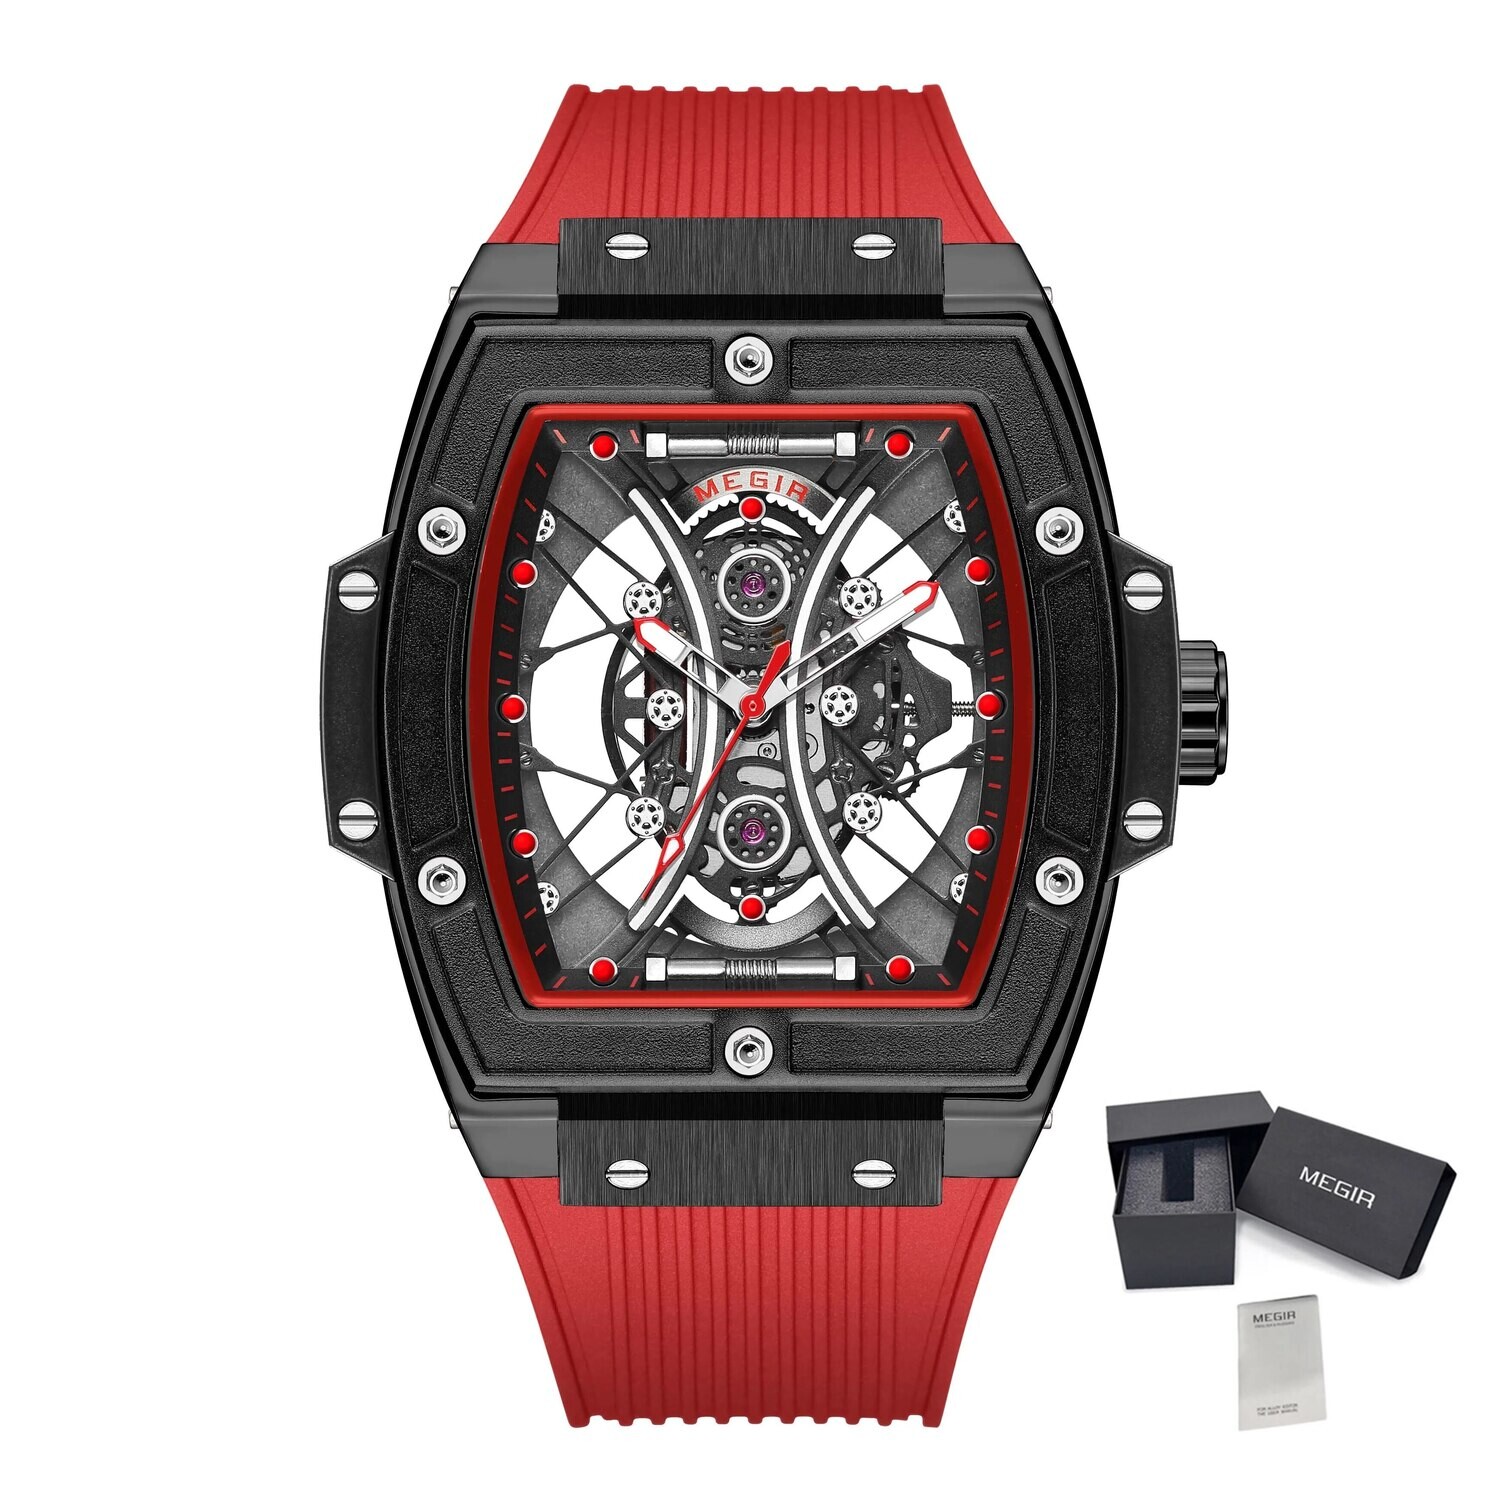 MEGIR Brand Luxury Quartz Watch for Men Fashion Military Sports Watches Waterproof Luminous Clock Wristwatch Reloj Hombre 8109, Color: Black Red